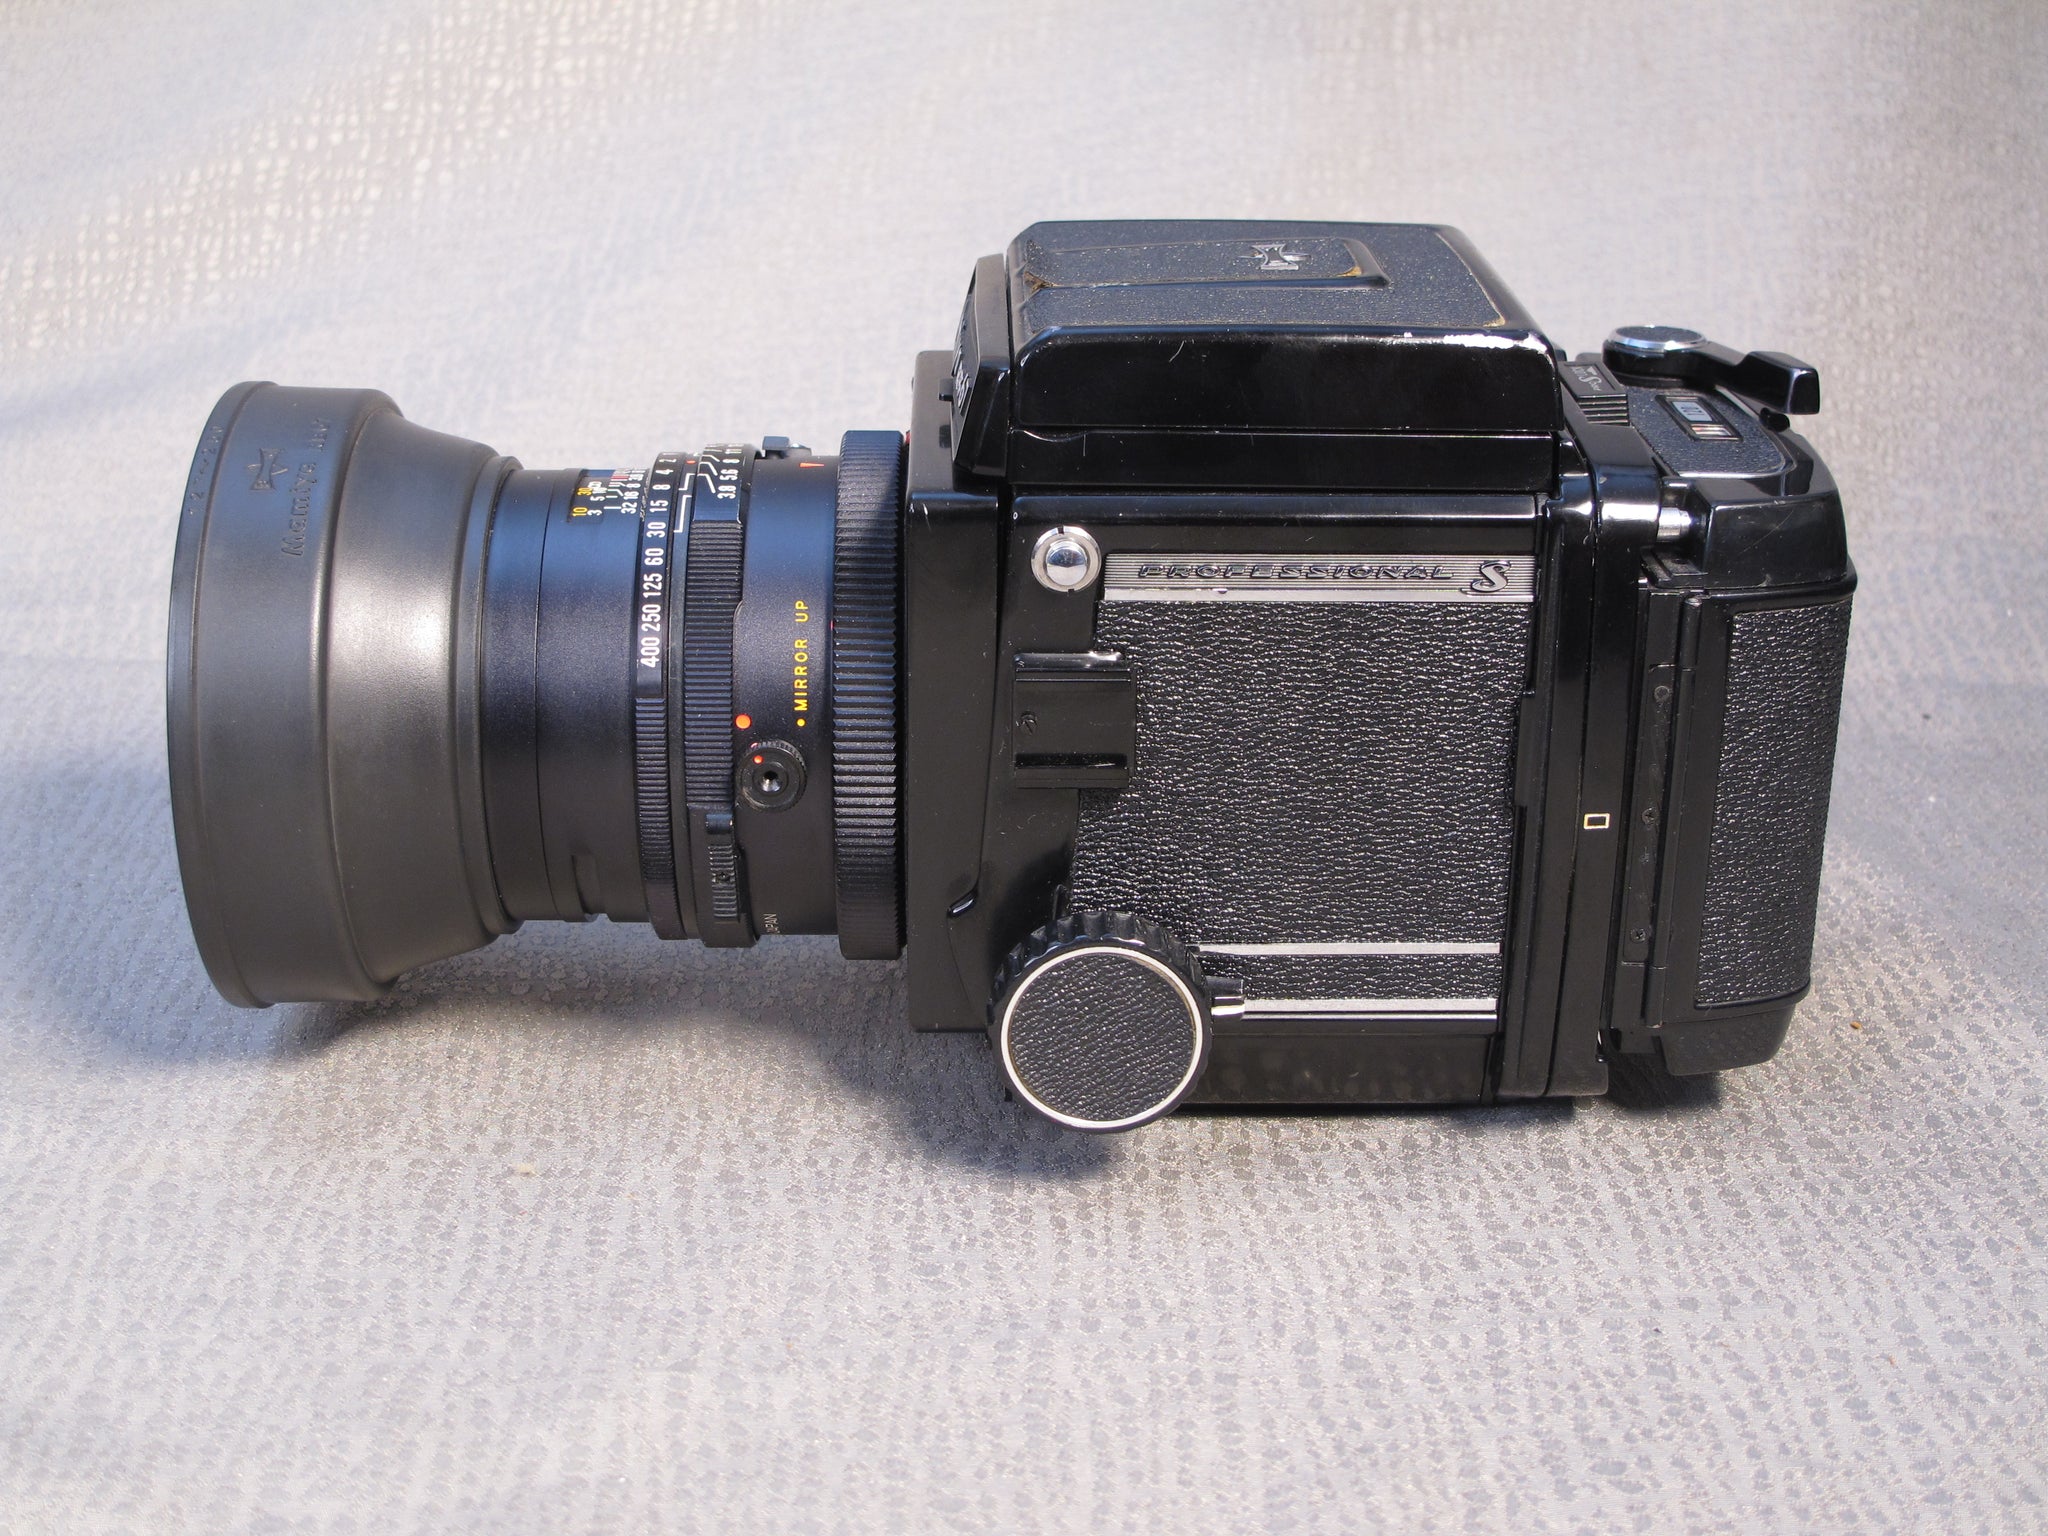 Mamiya RB67 Medium Format Camera with 90mm Lens and Waist-Level